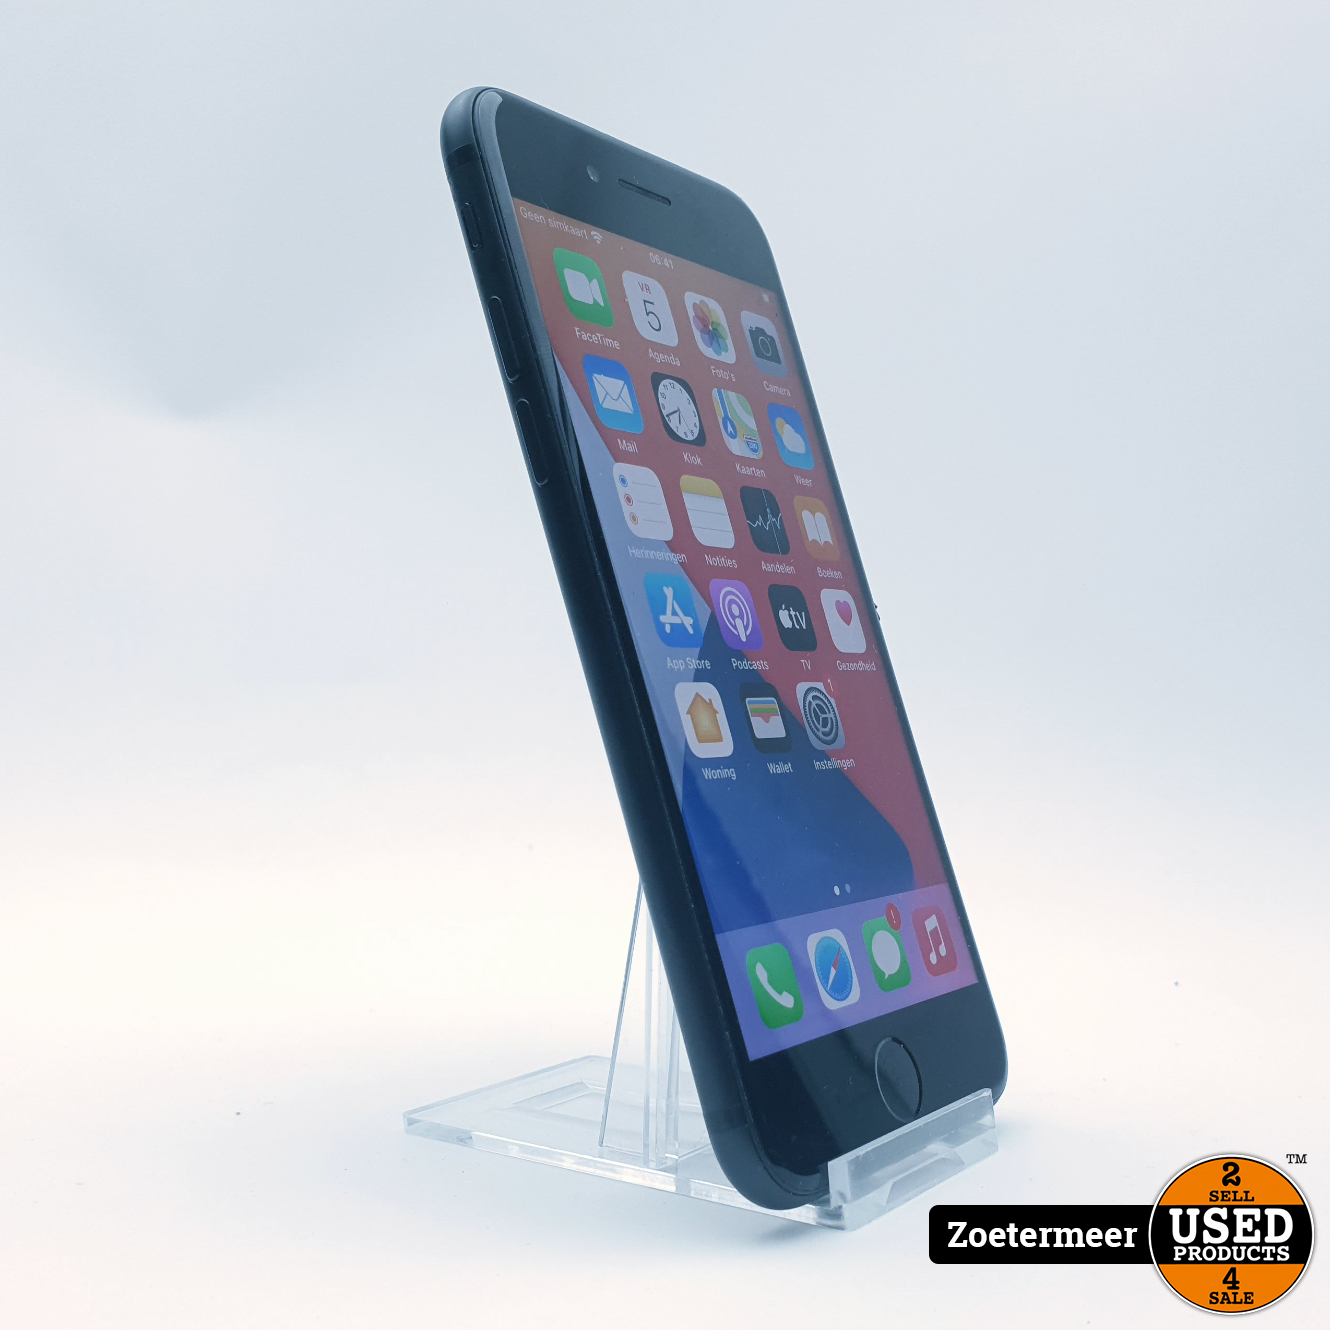 alarm Malaise Elegantie Apple iPhone 7 32GB 100% Zwart - Used Products Zoetermeer